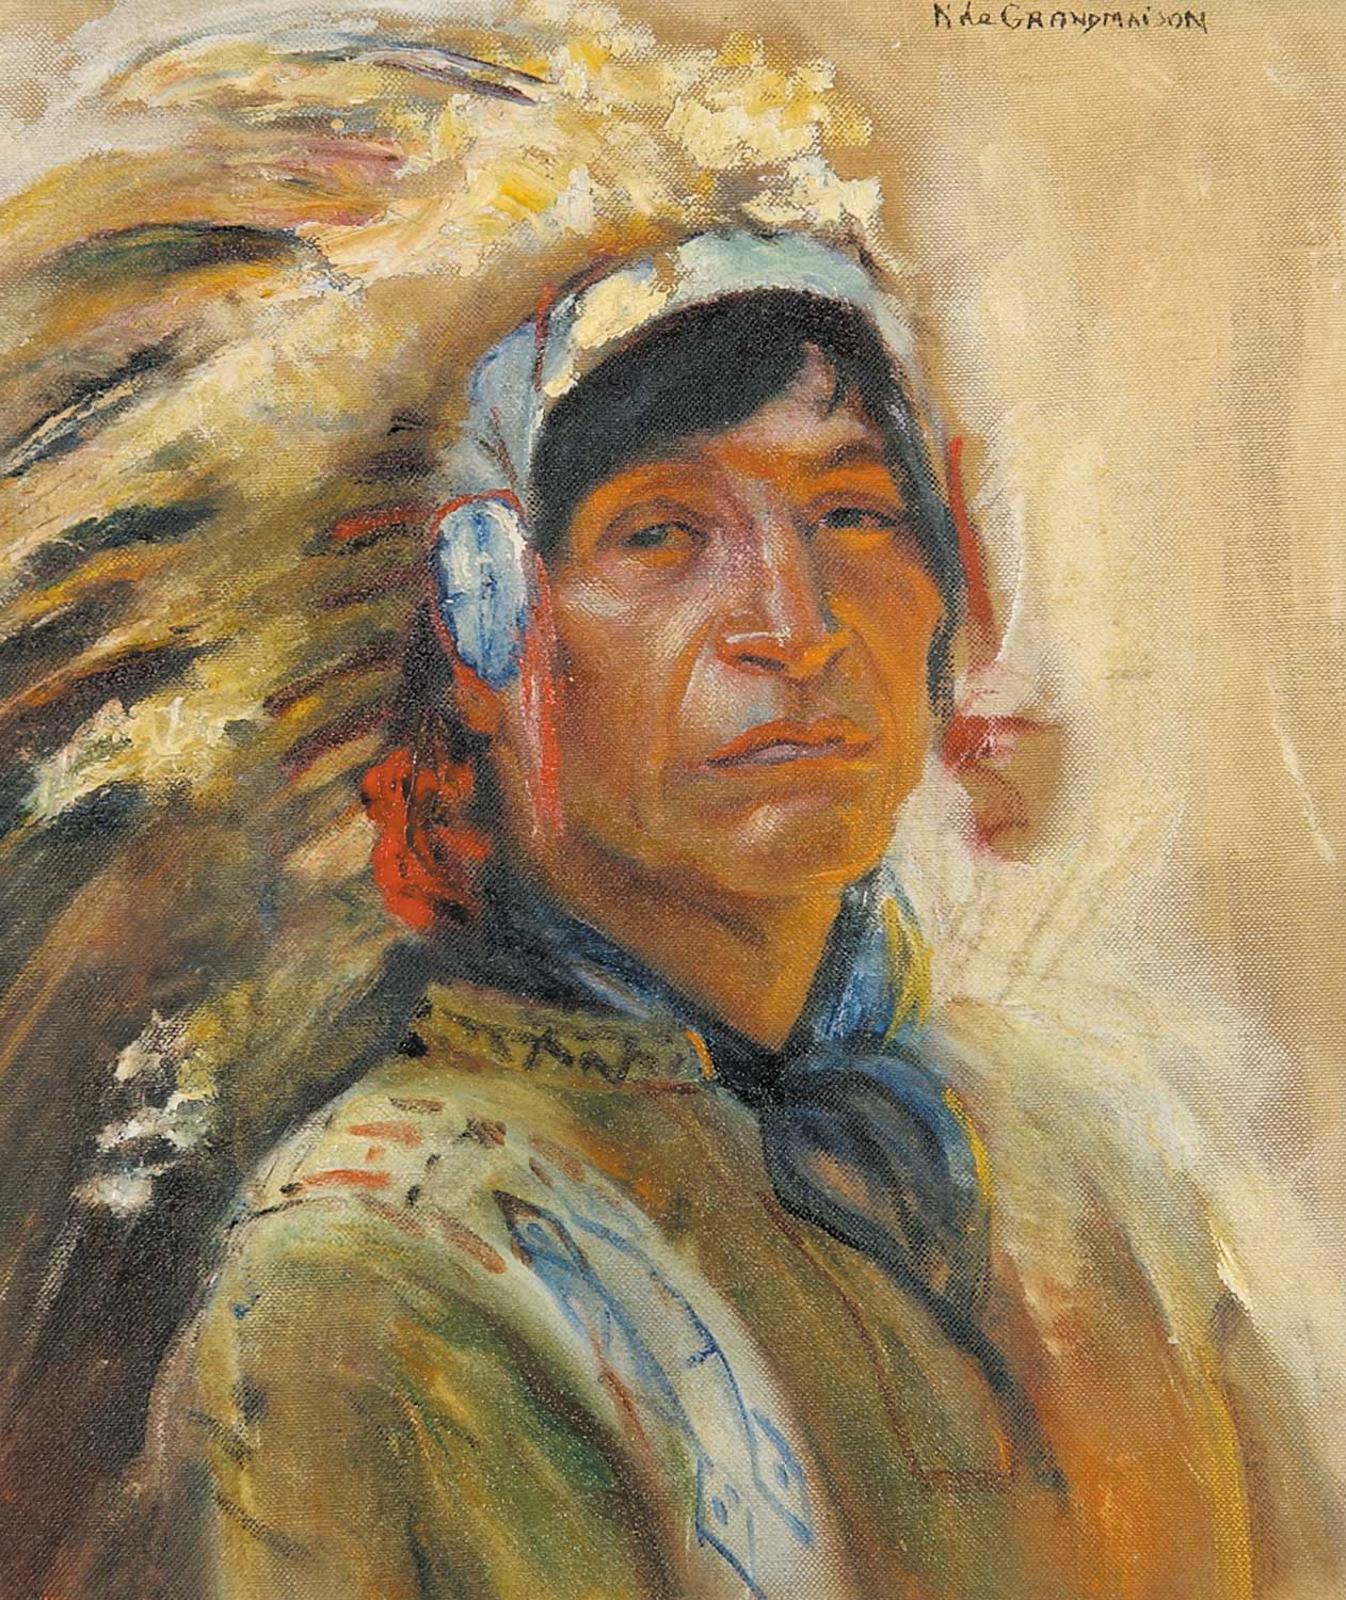 Nicholas (Nickola) de Grandmaison (1892-1978) - Untitled - The Young Chief